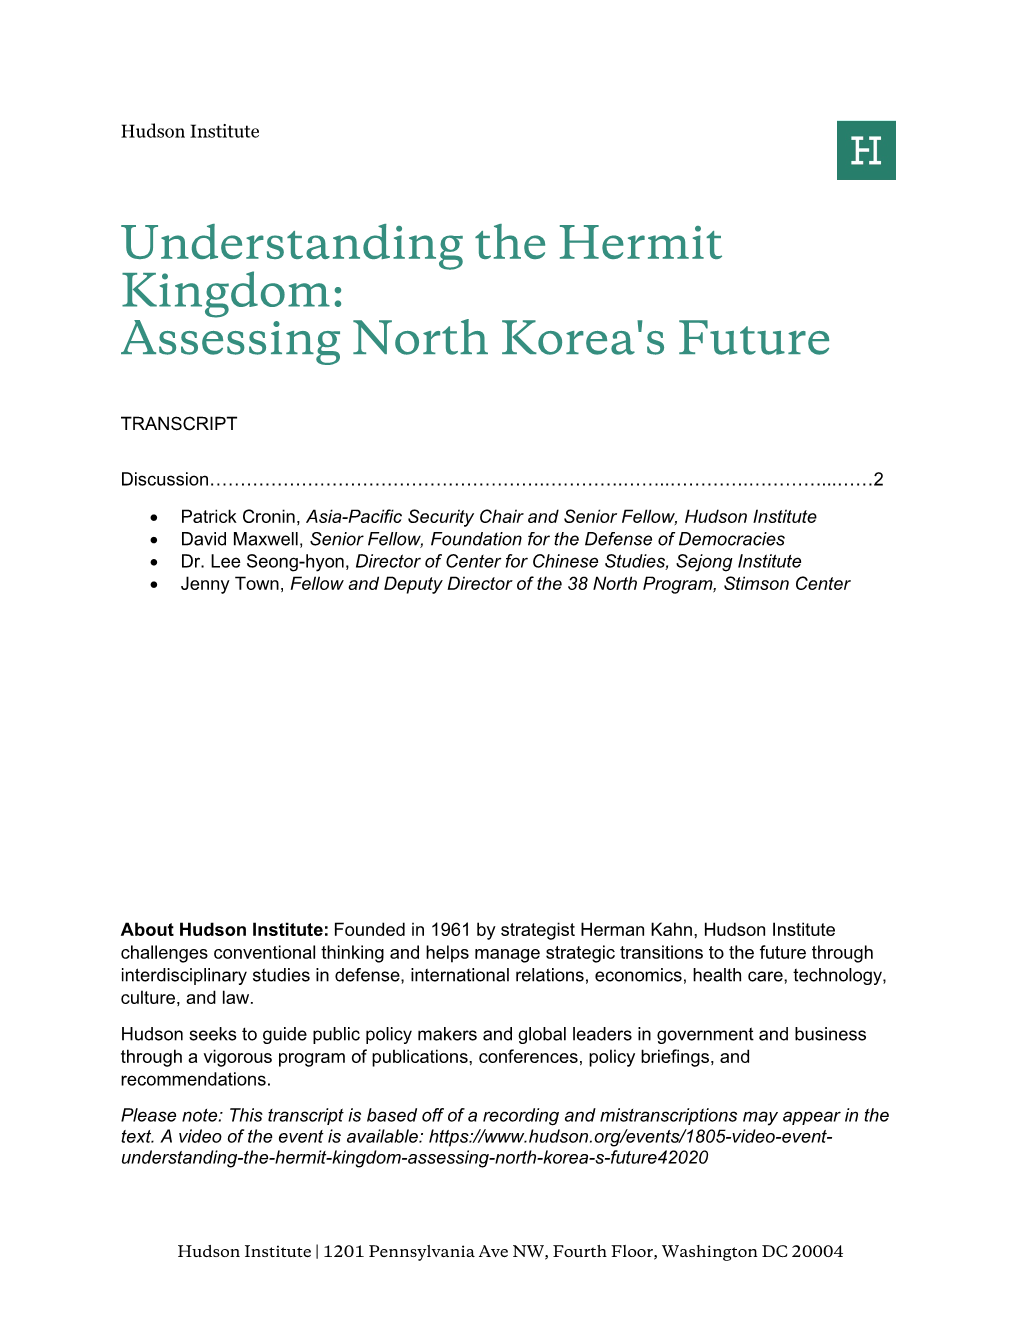 Understanding the Hermit Kingdom: Assessing North Korea's Future